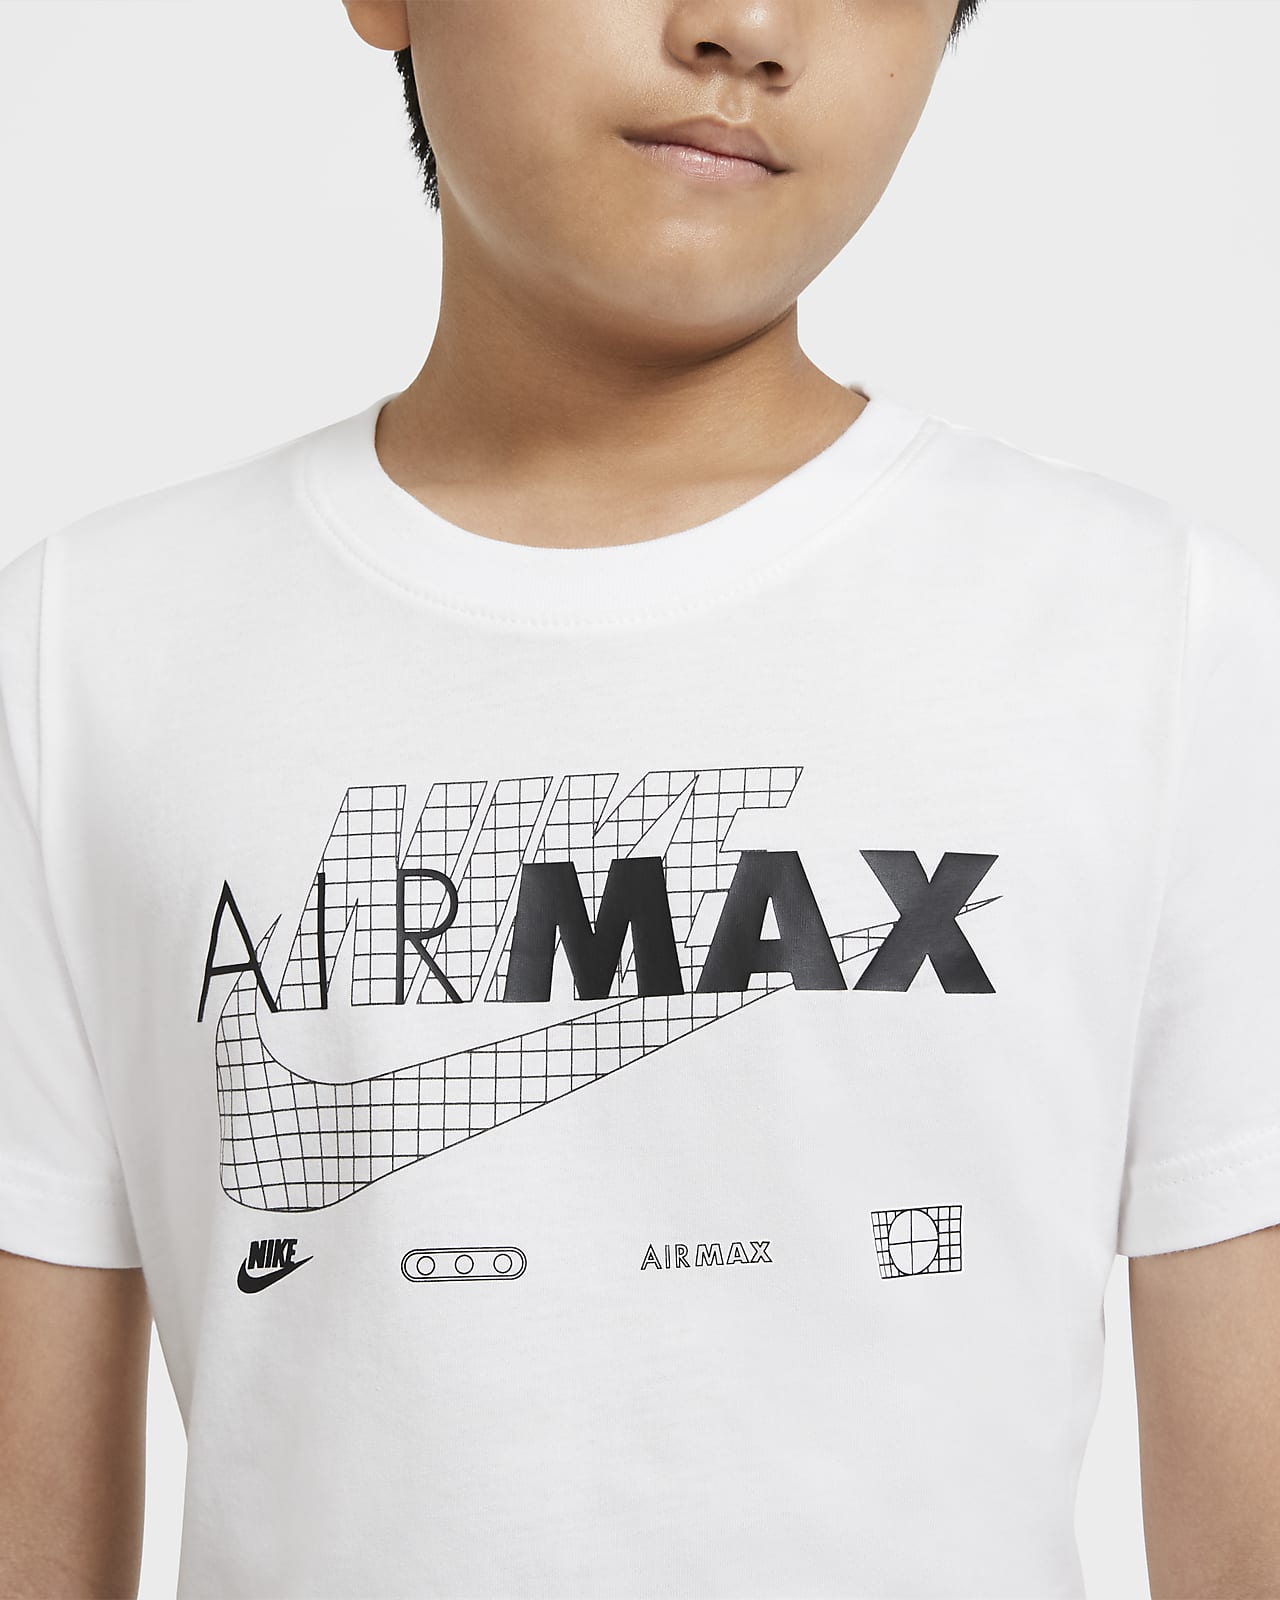 air max shirt